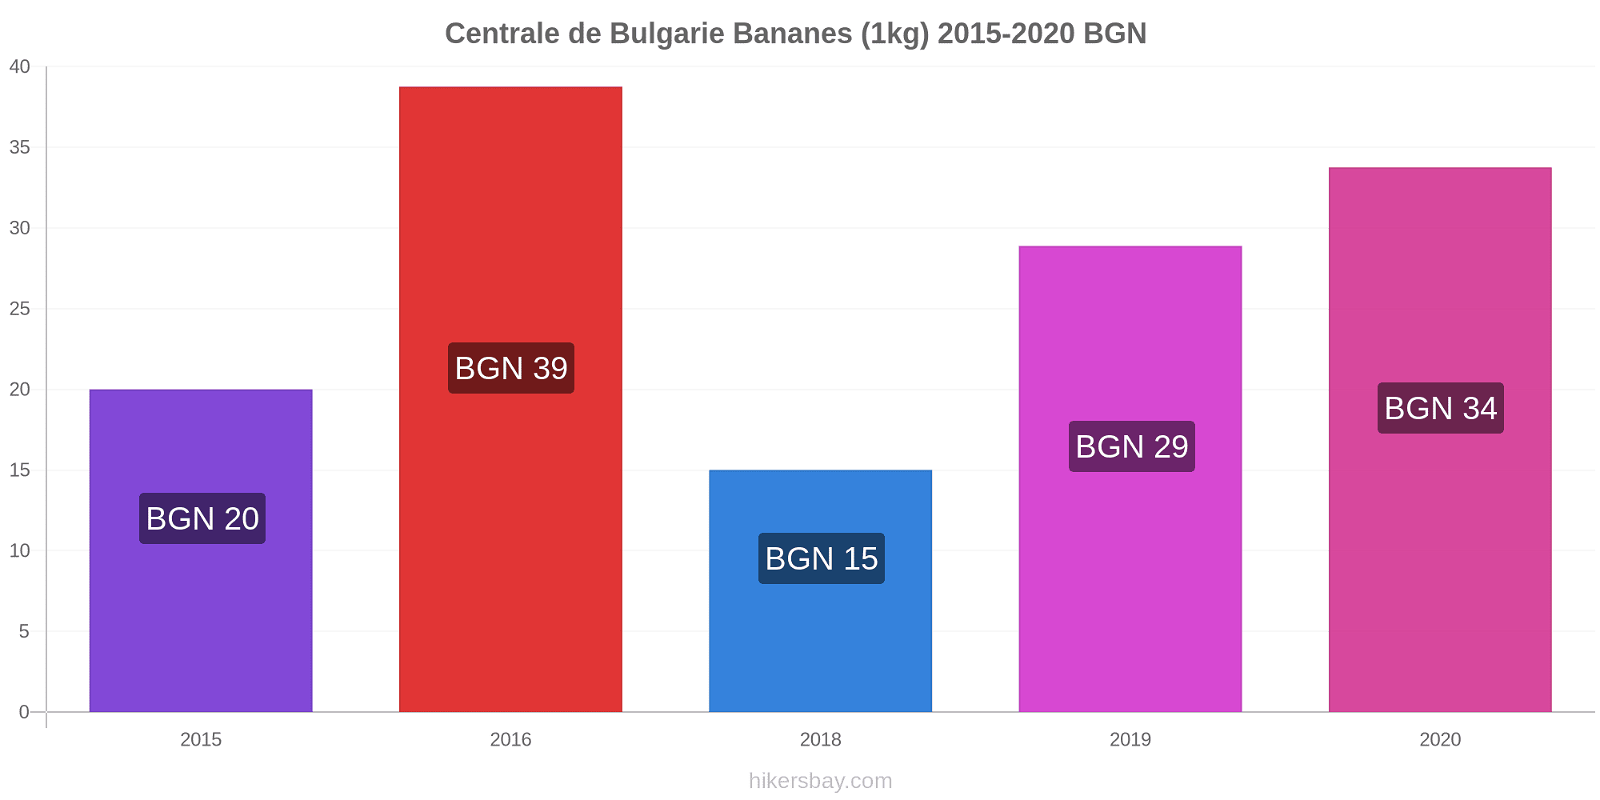 Centrale de Bulgarie changements de prix Bananes (1kg) hikersbay.com